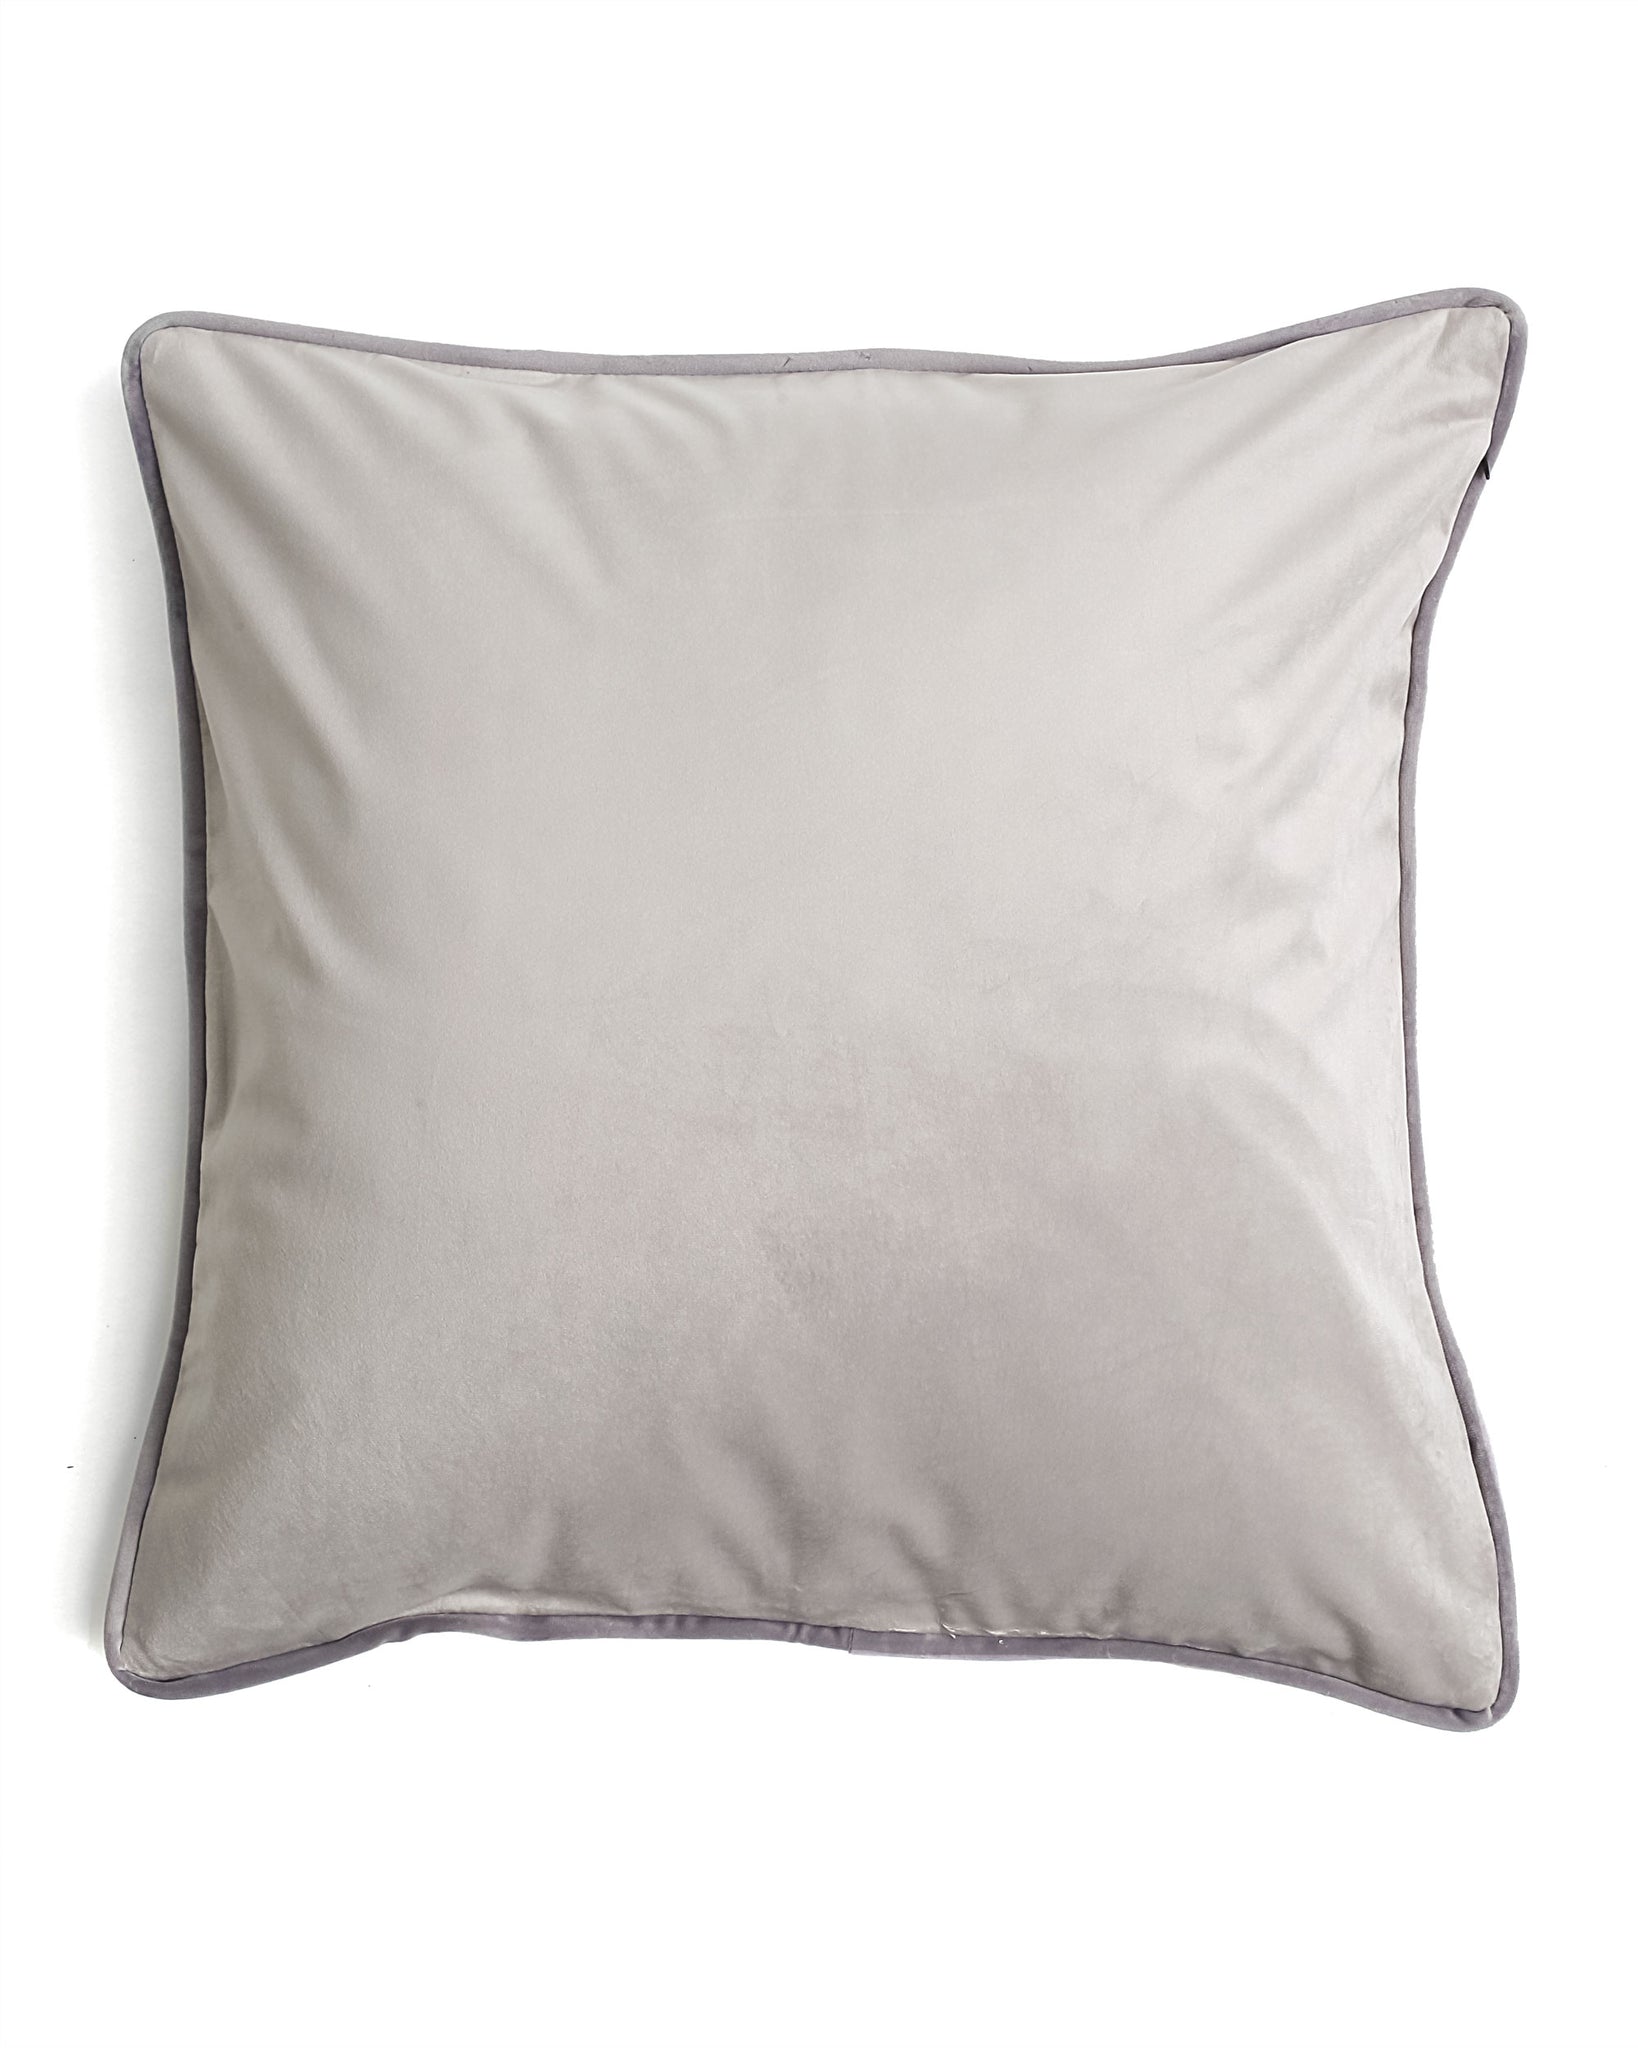 Luxe Velvet Silver Pillow Cover